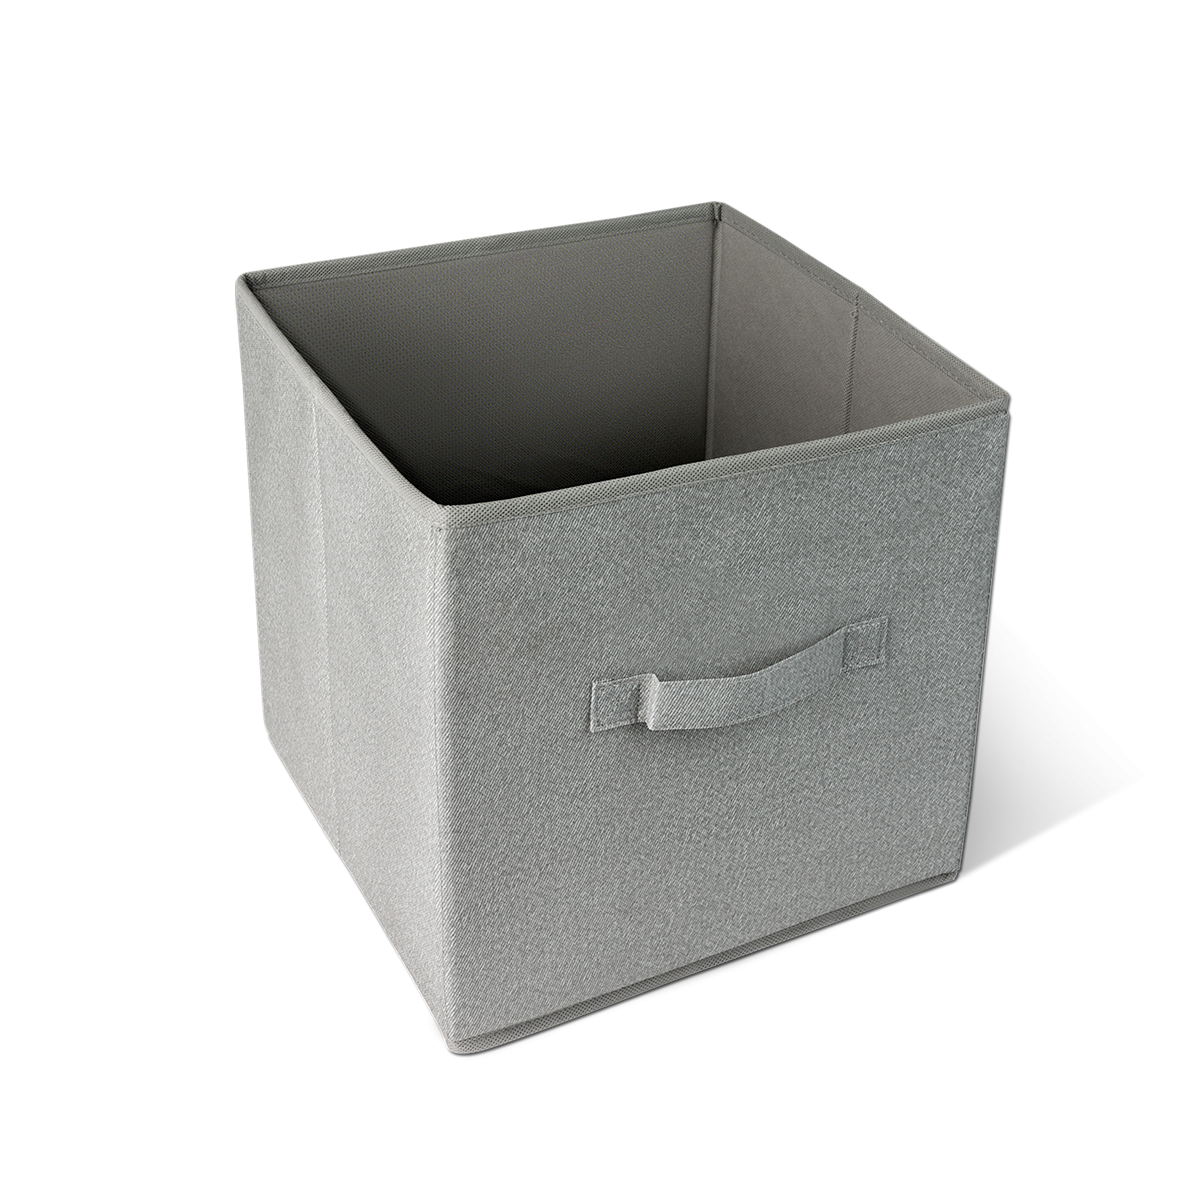 Ящик для хранения MVM тканевый серый 280x280x280 TH-08 GRAY